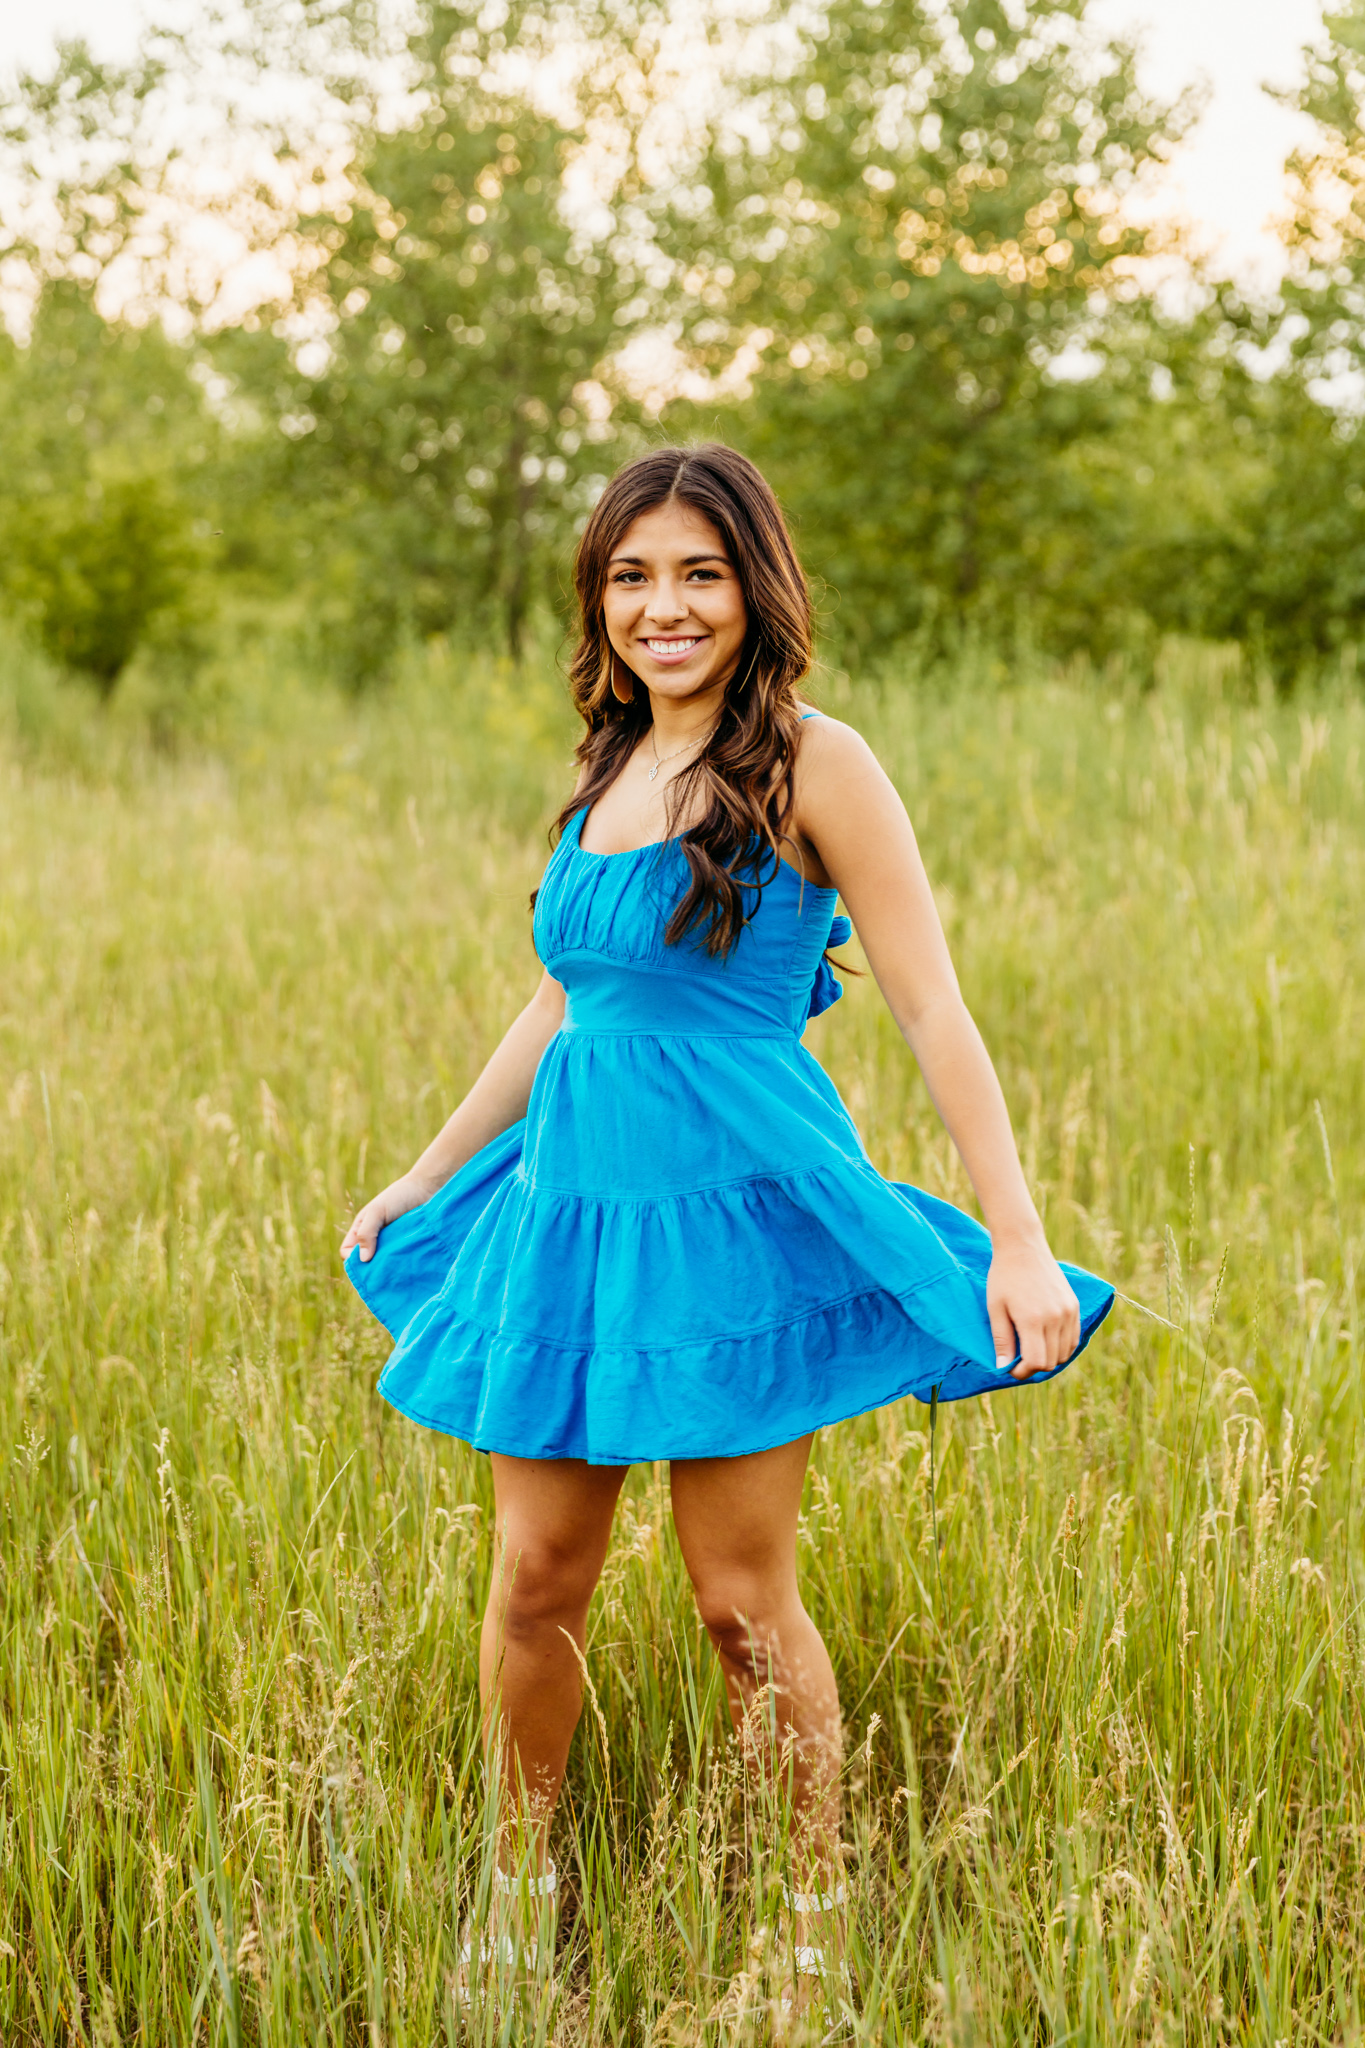 image of a beautiful teen girl in a bright blue dress wearing her brown curly hair down, as she twirls in a grassy field near Winneconne